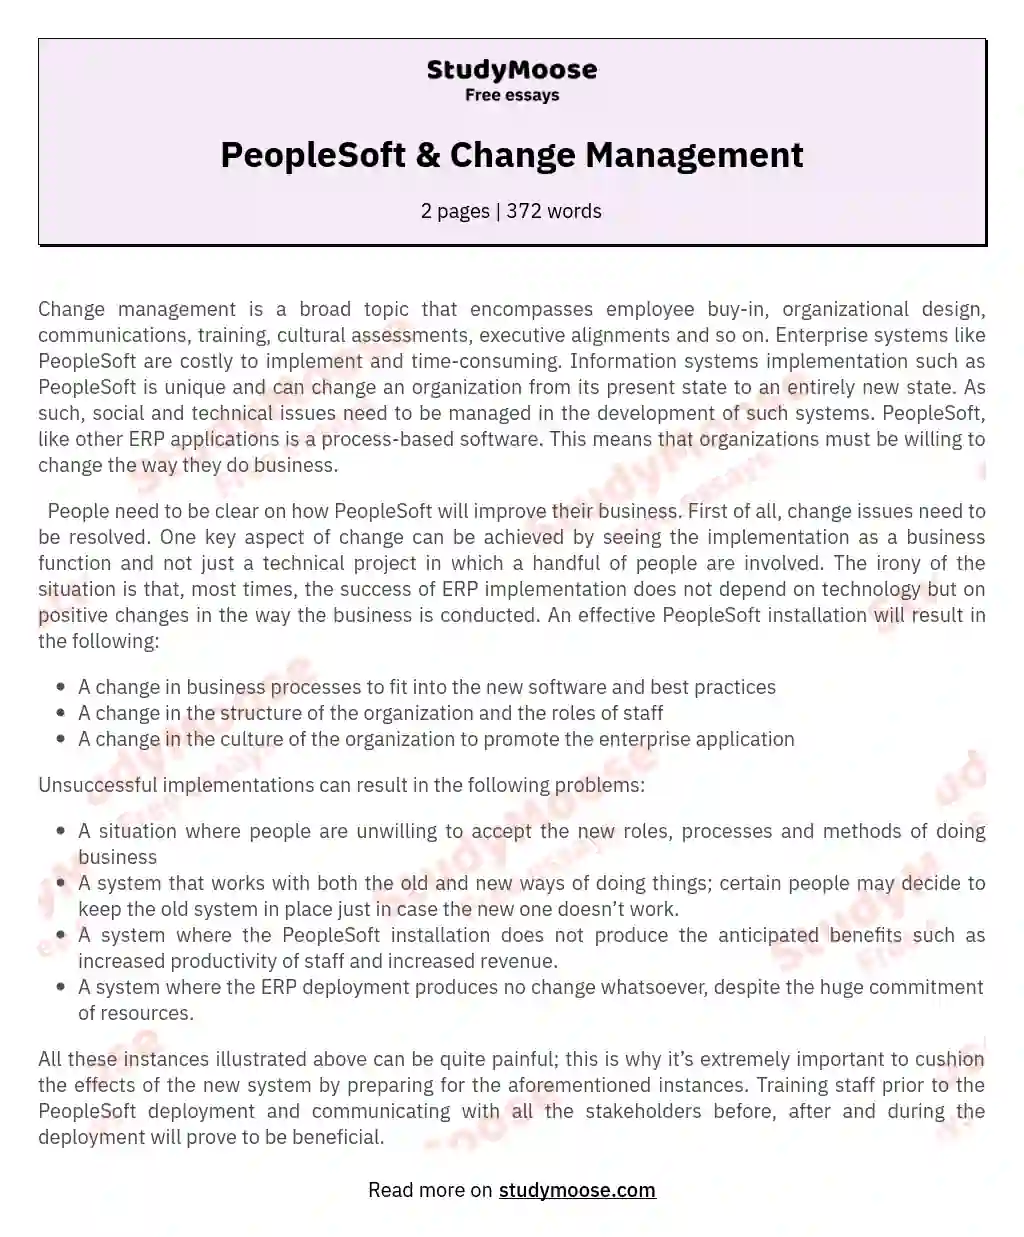 PeopleSoft &amp; Change Management